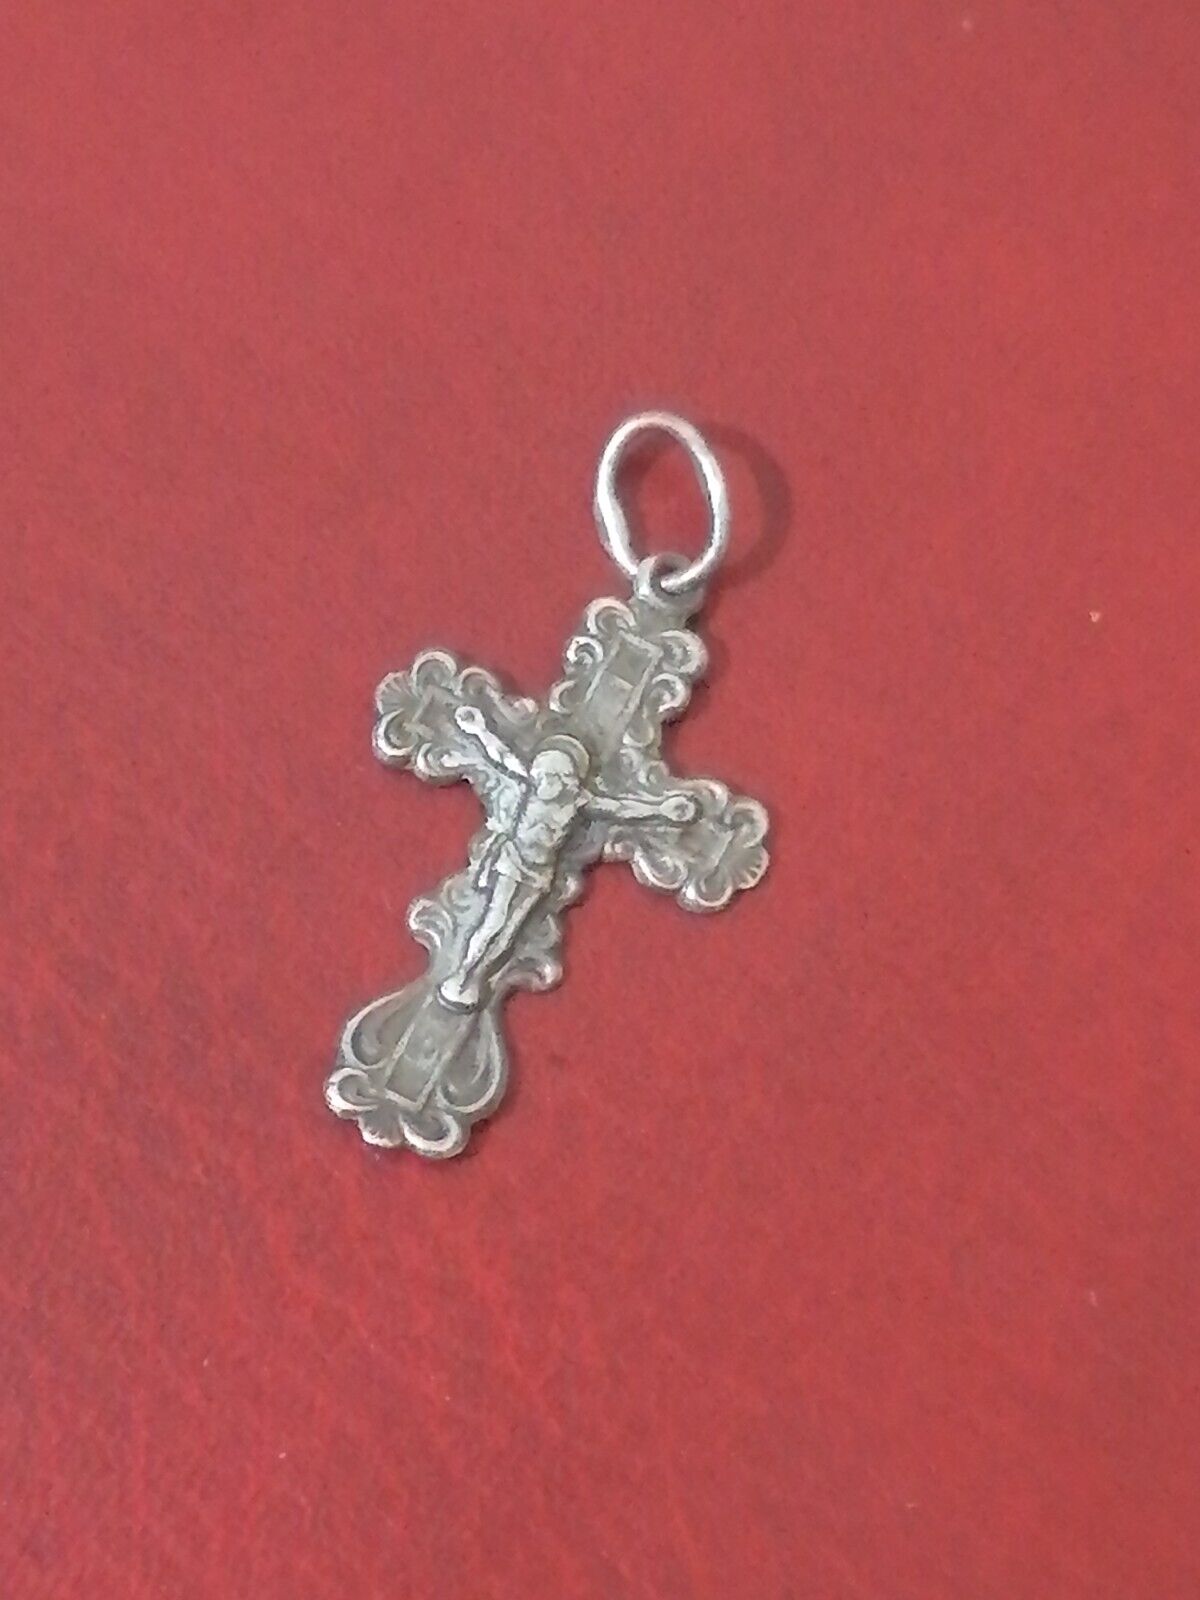 Antique Solid Silver Christian Religious Unique Cross Charm Pendant 1.43g 32.4mm